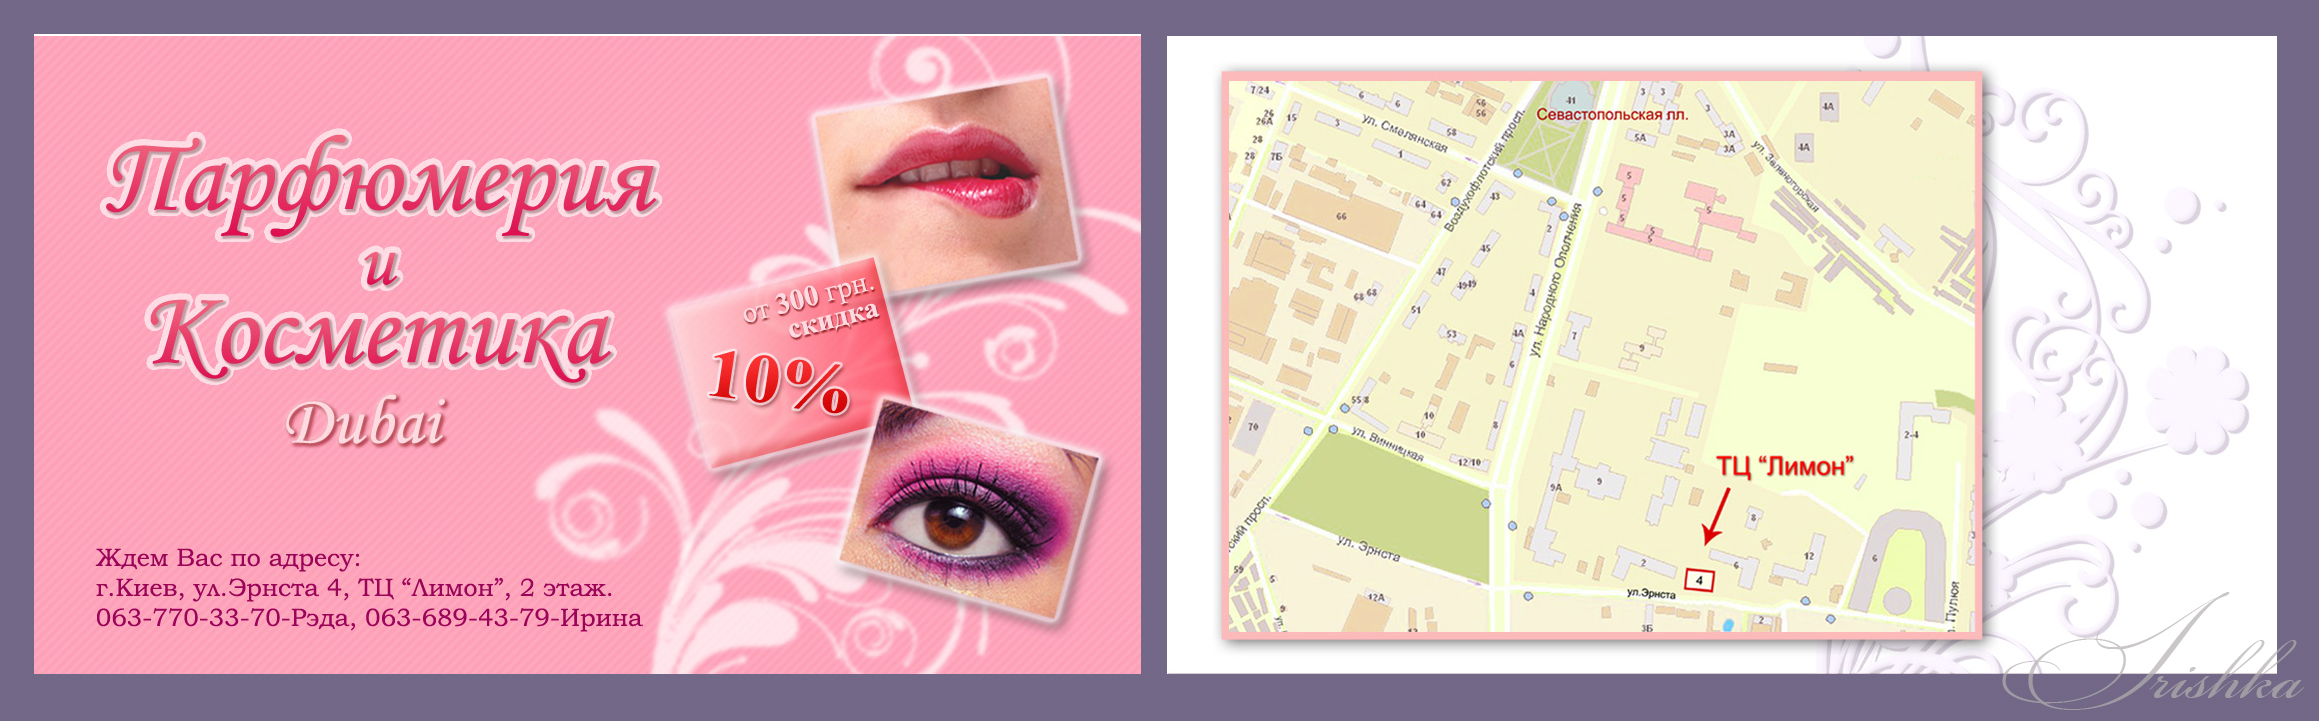 Дизайн визиток для магазина парфюмерии и косметики